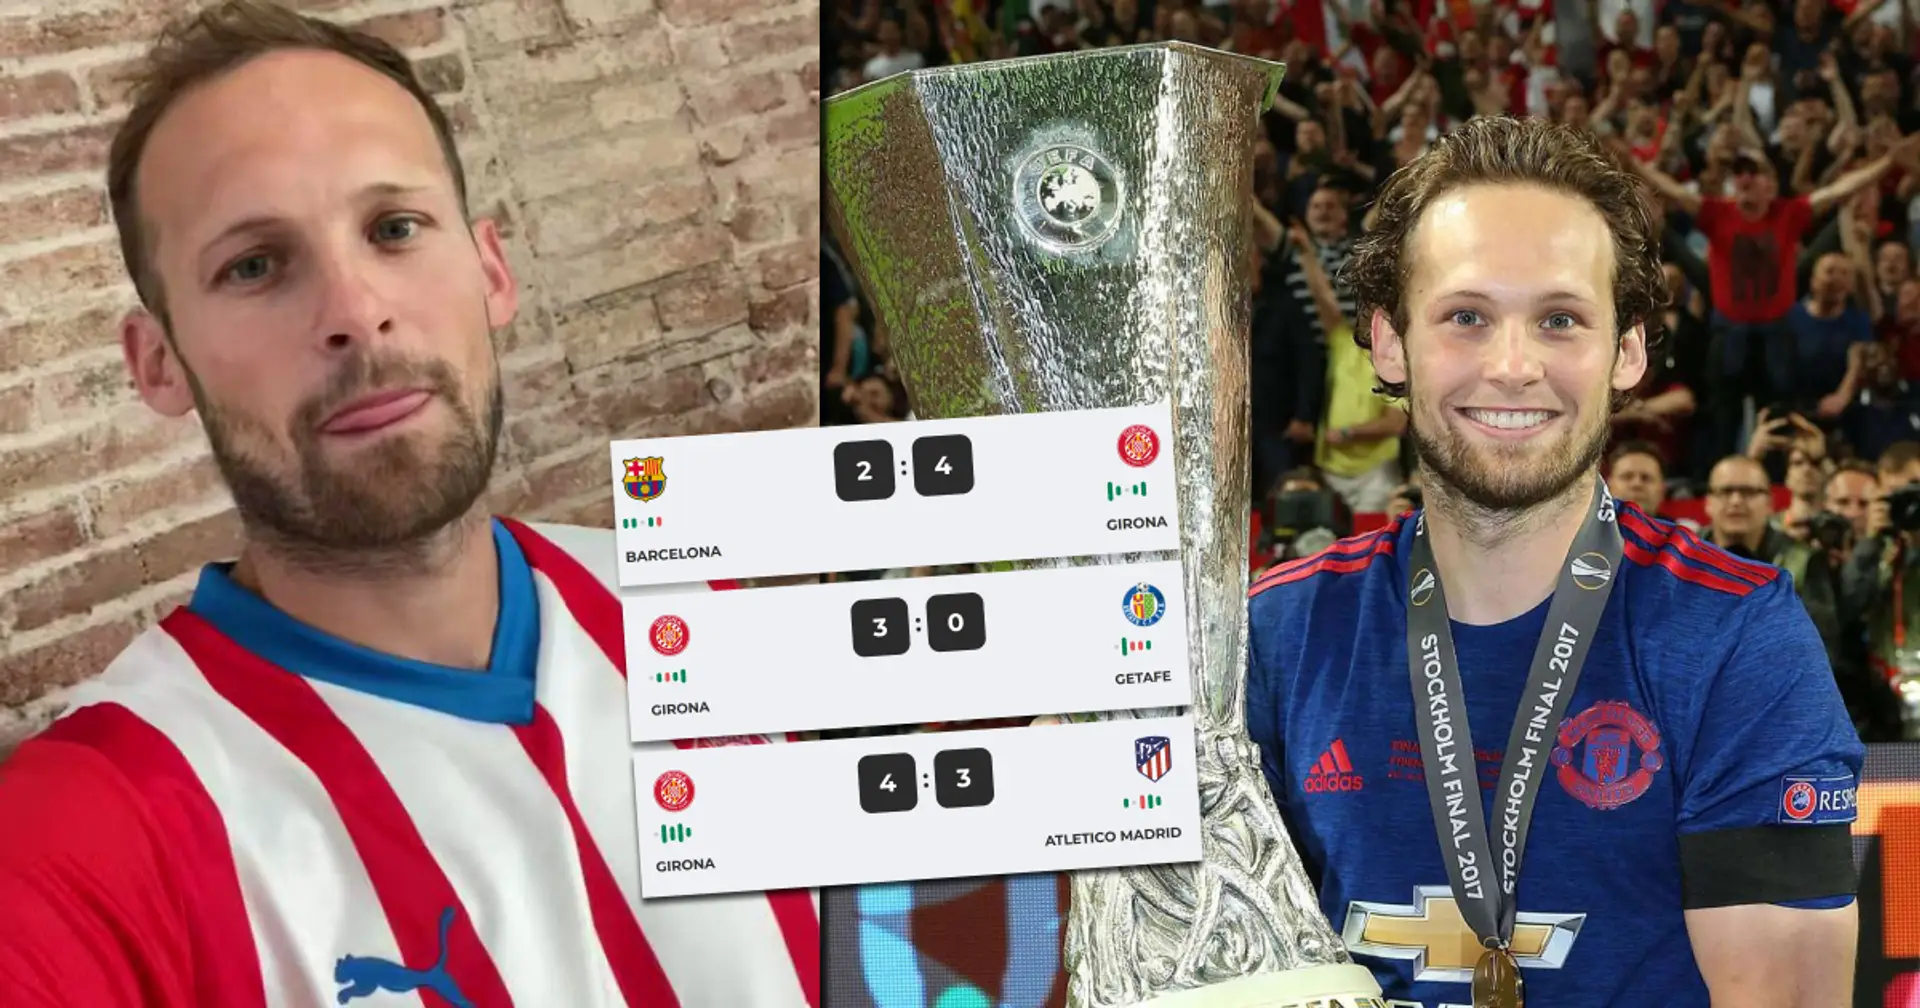 33-year-old Daley Blind leading underdogs Girona to La Liga trophy